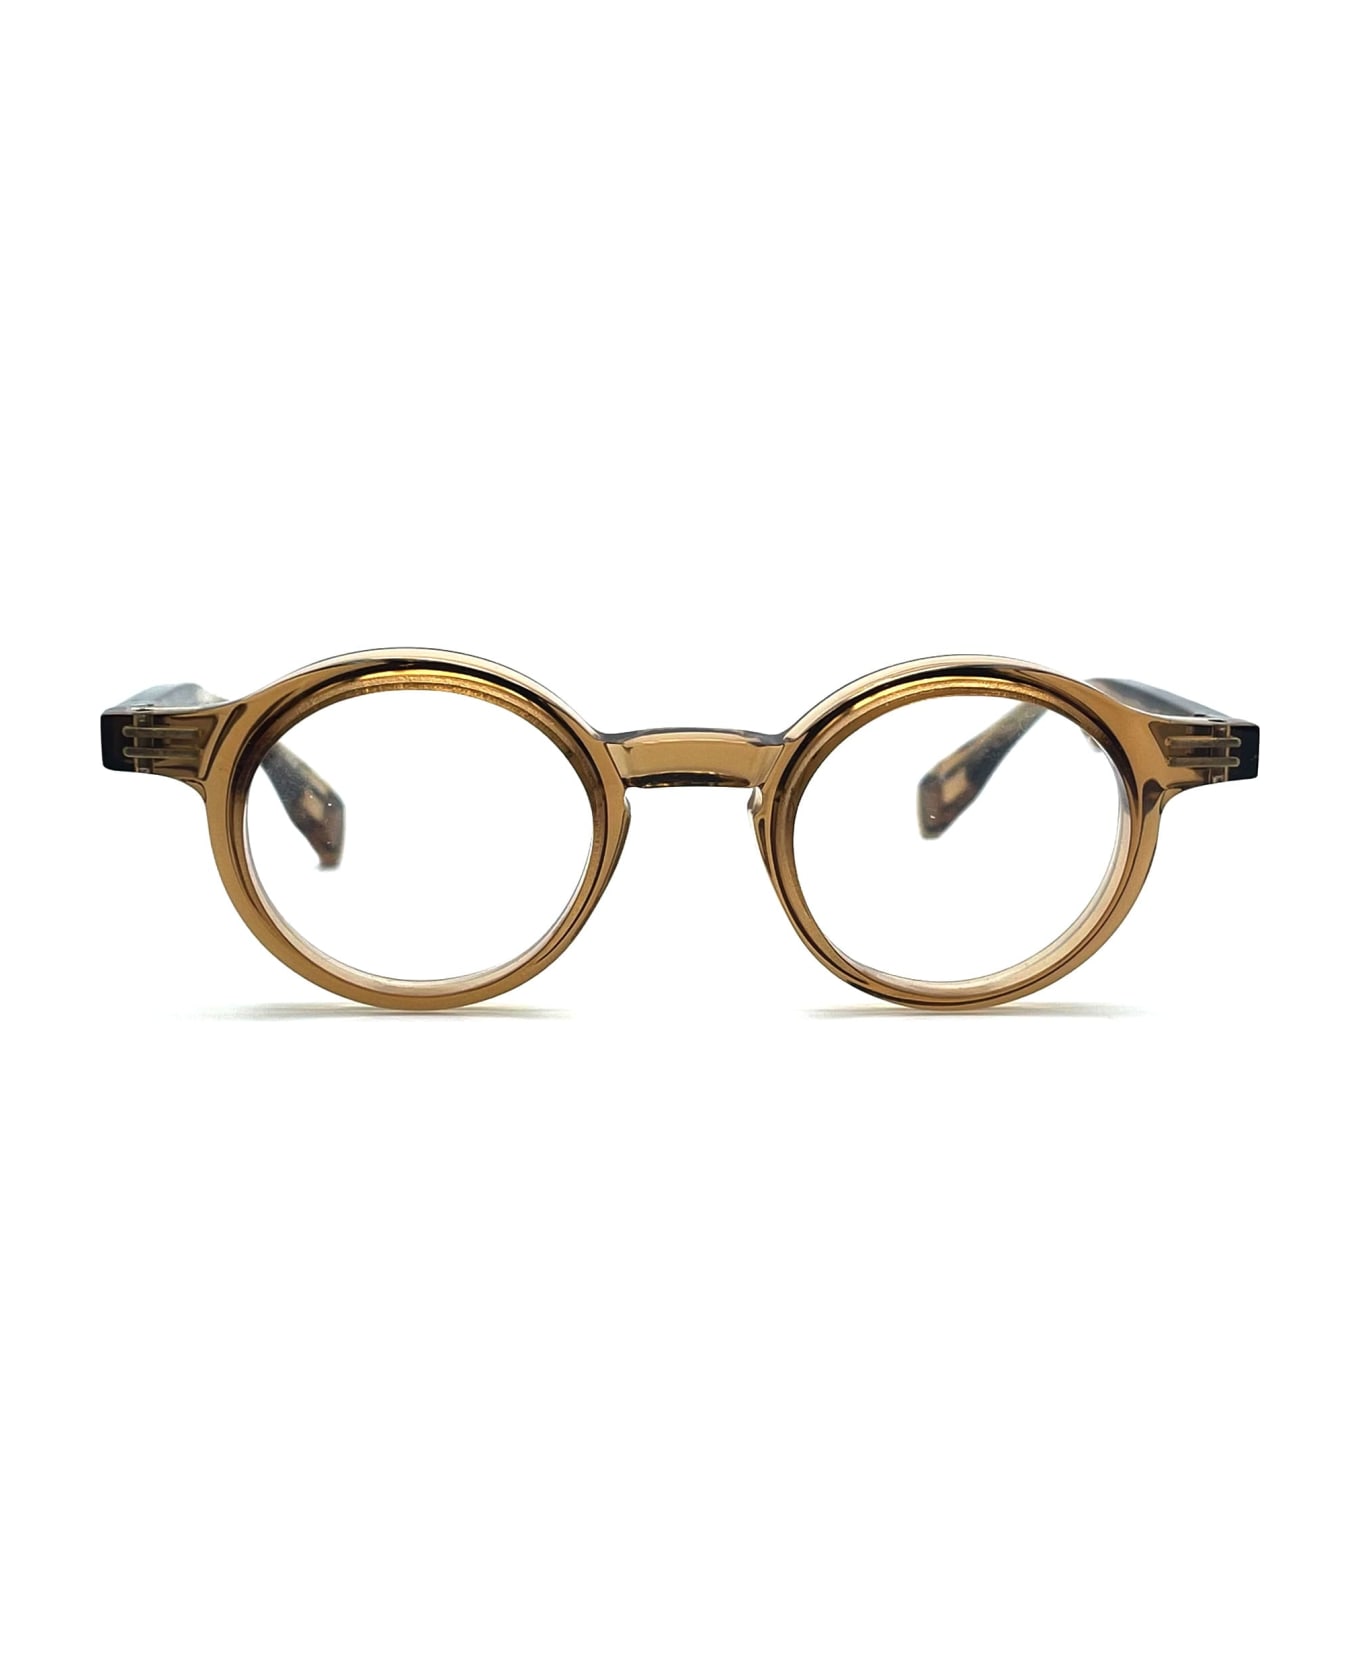 FACTORY900 Rf-018 - 893 Glasses - brown アイウェア